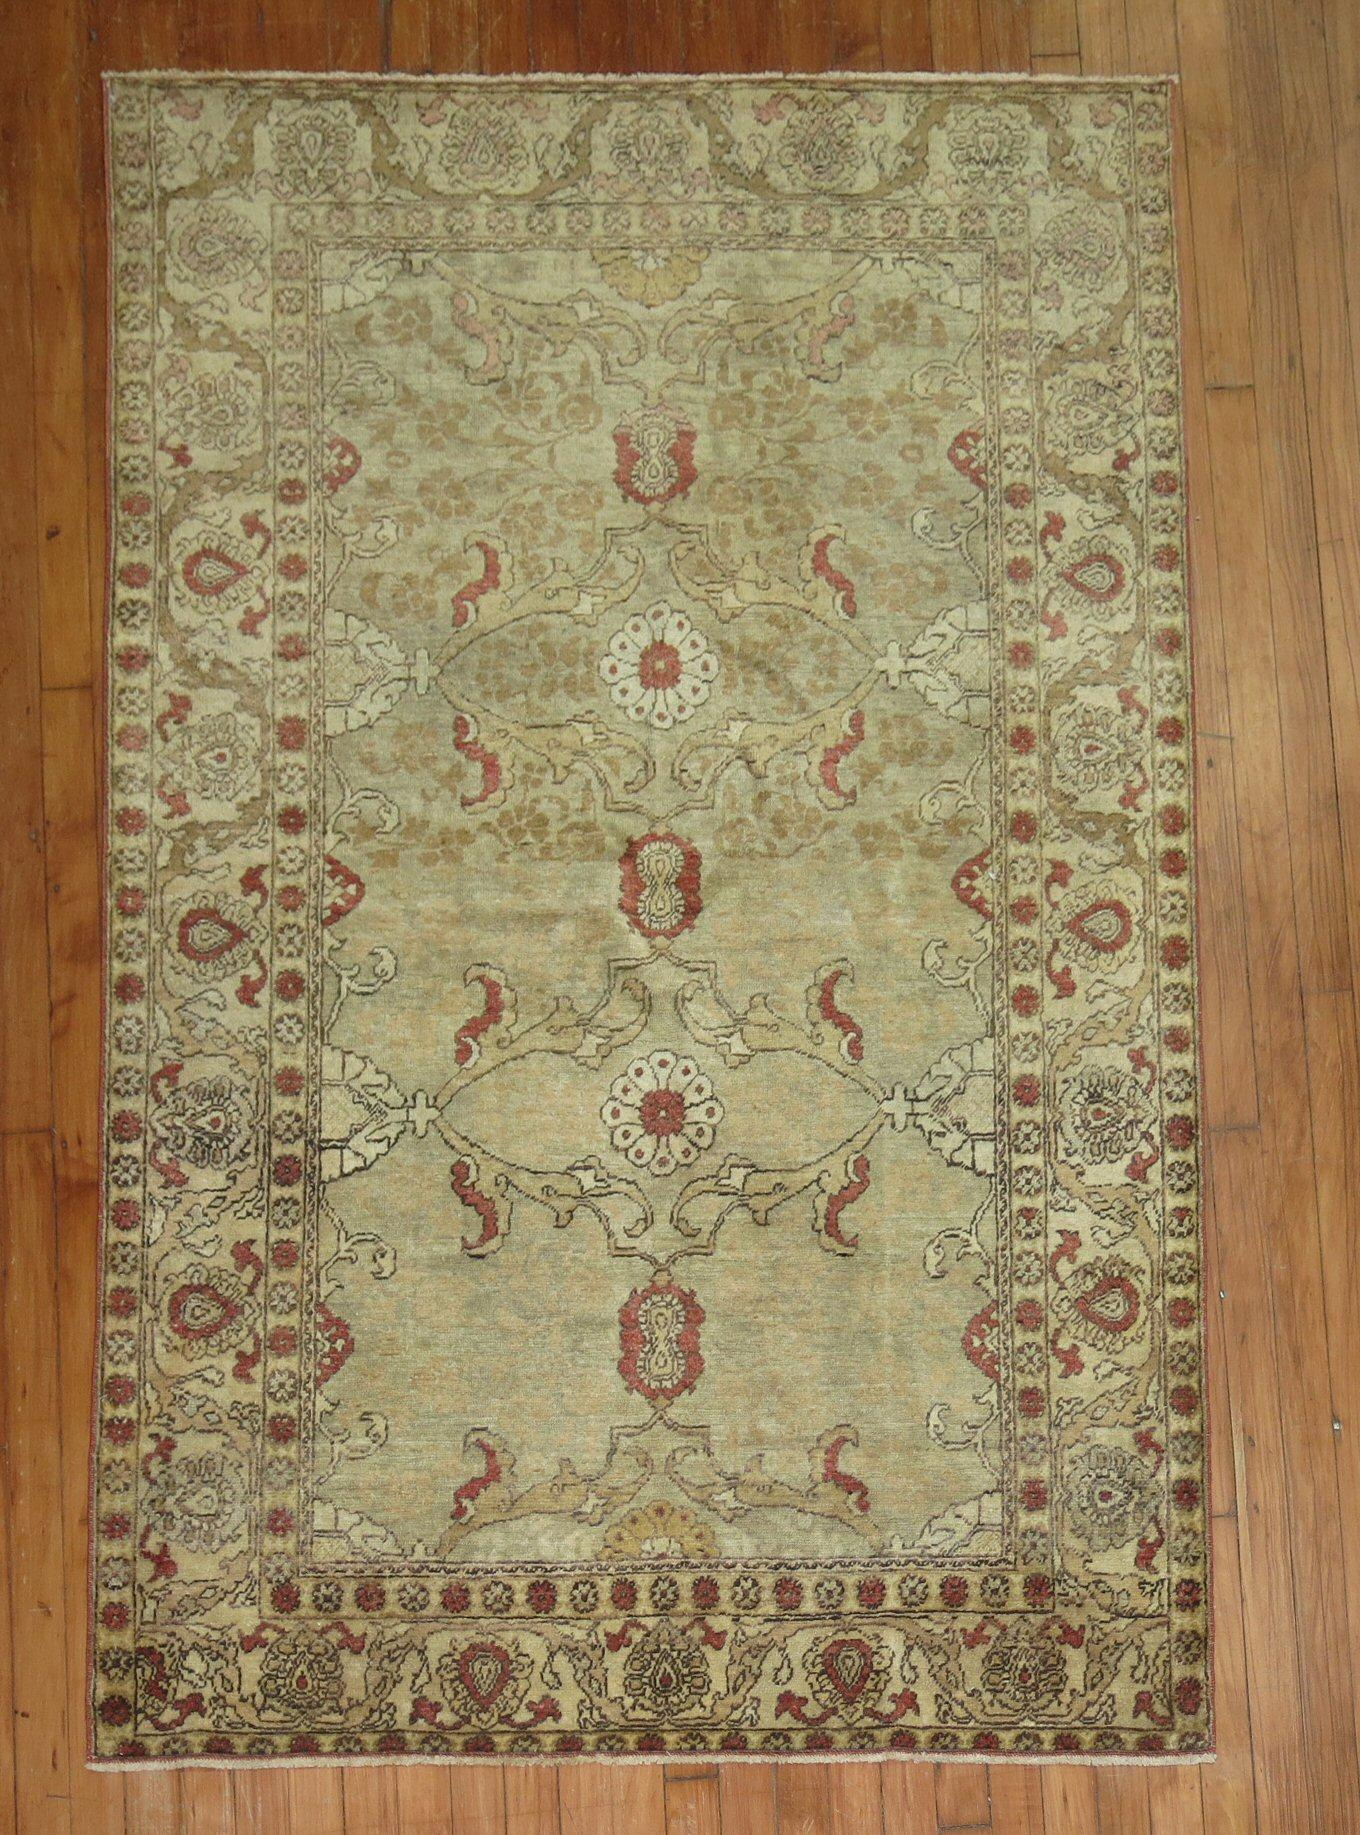 An early 20th century Turkish Sivas Carpet.

Measures: 4' x 6.2''.